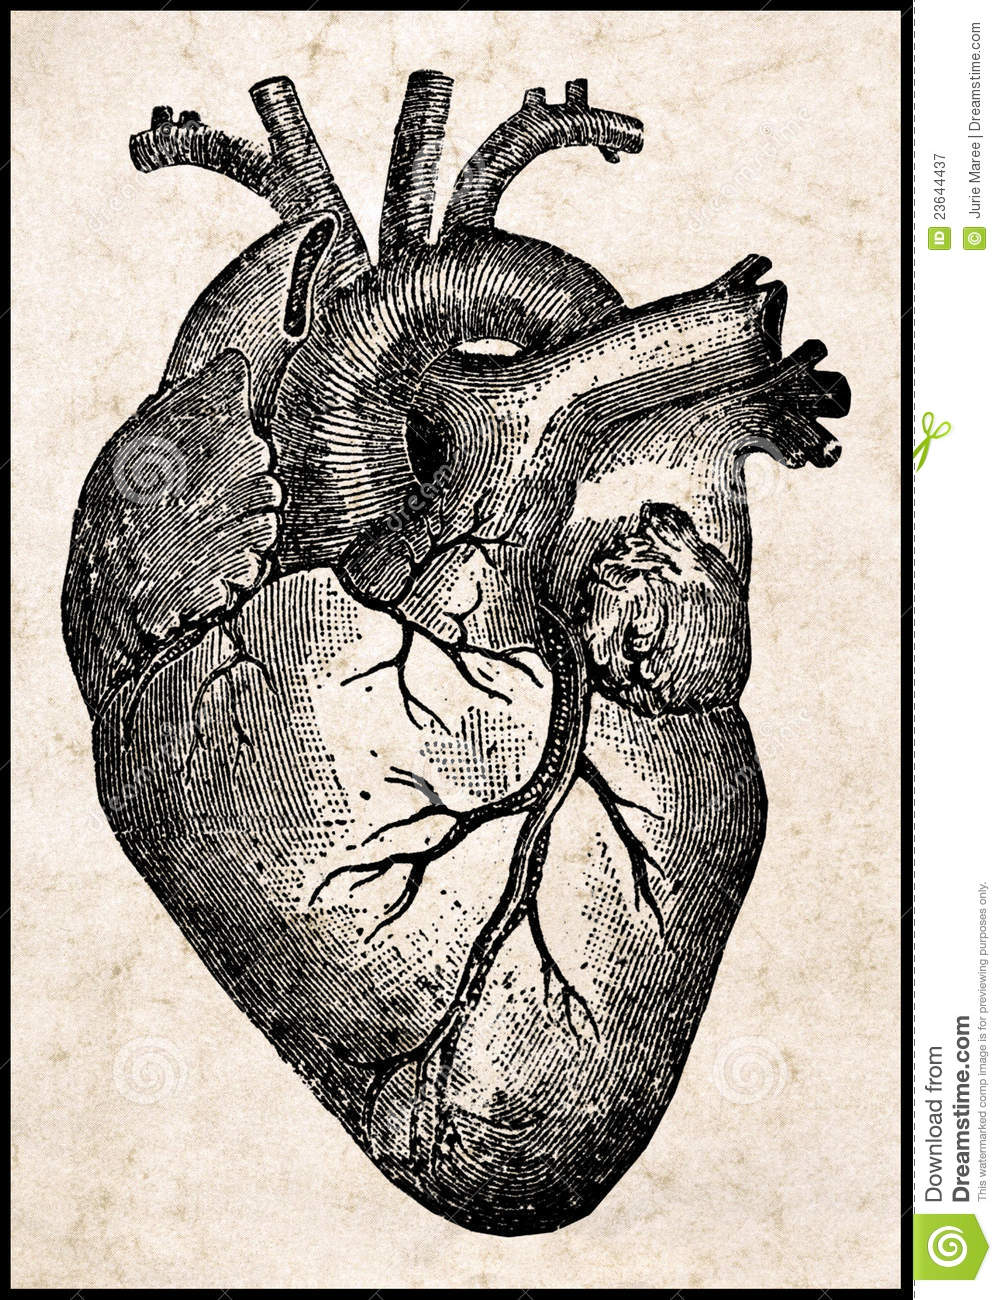 Human Heart Pencil Drawing at Explore collection